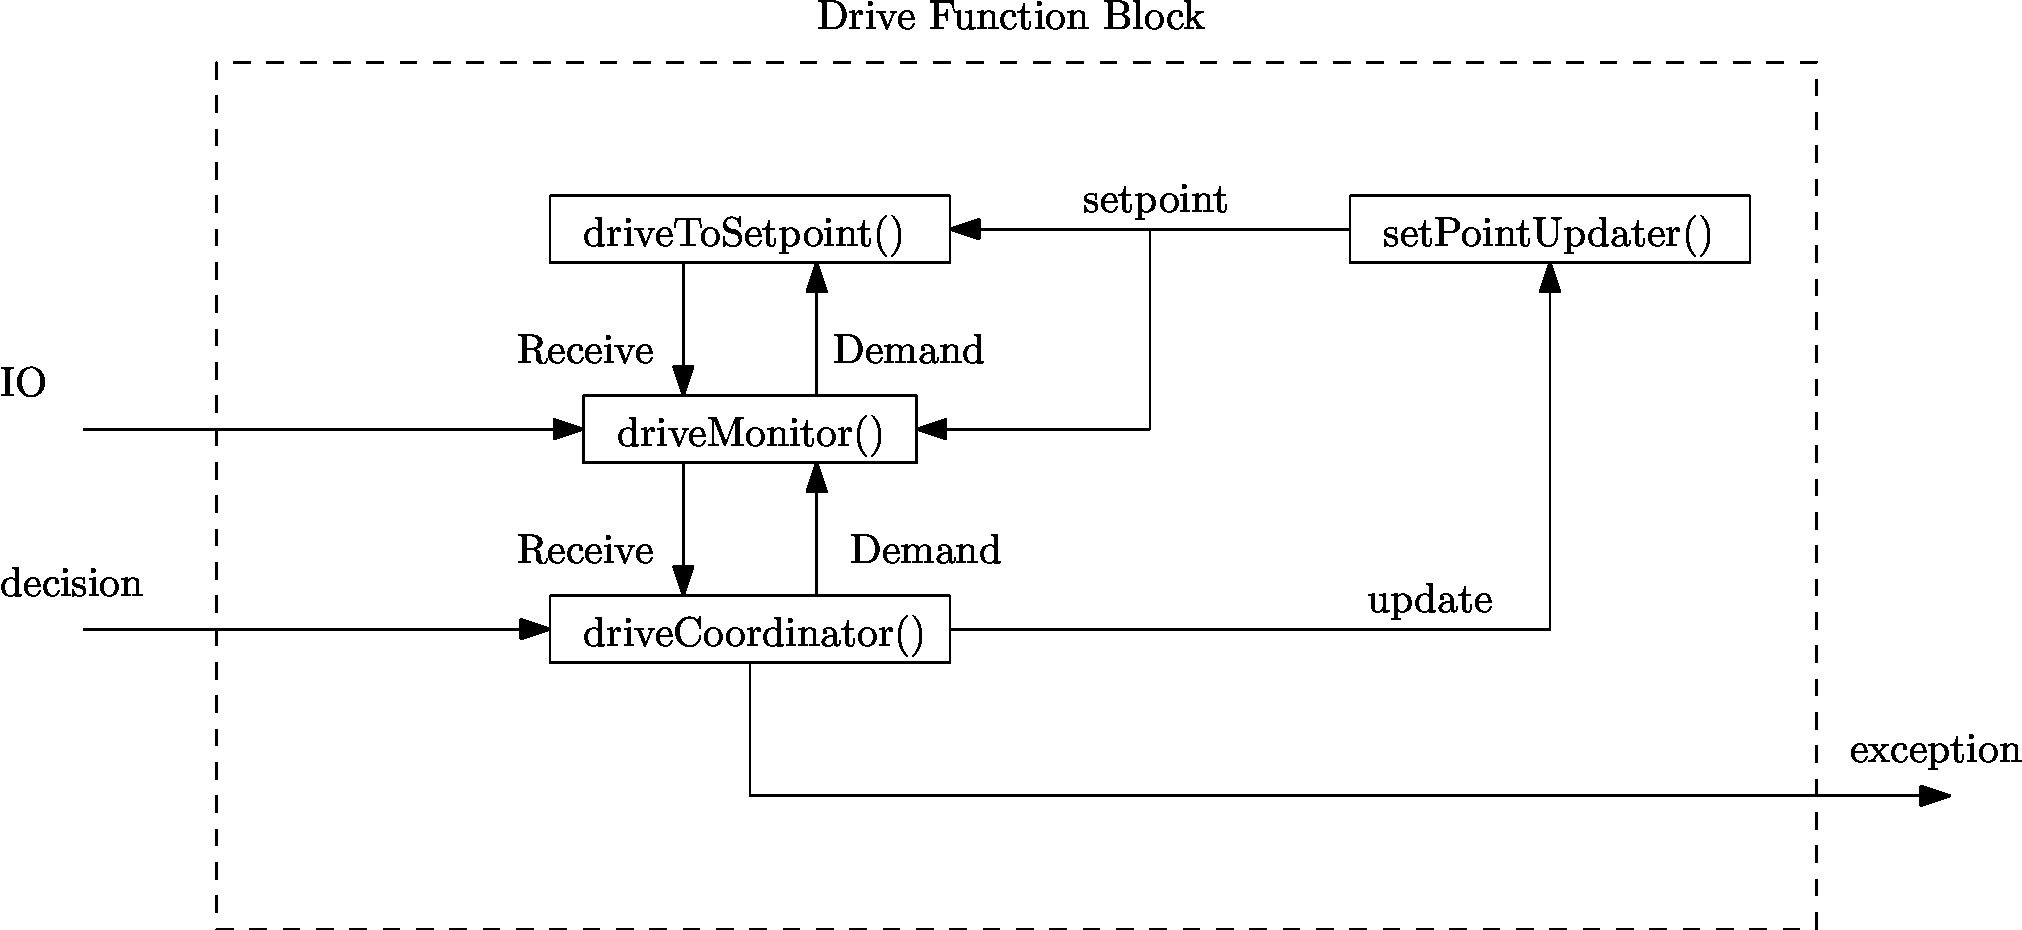 File:Drive Function Block.jpg